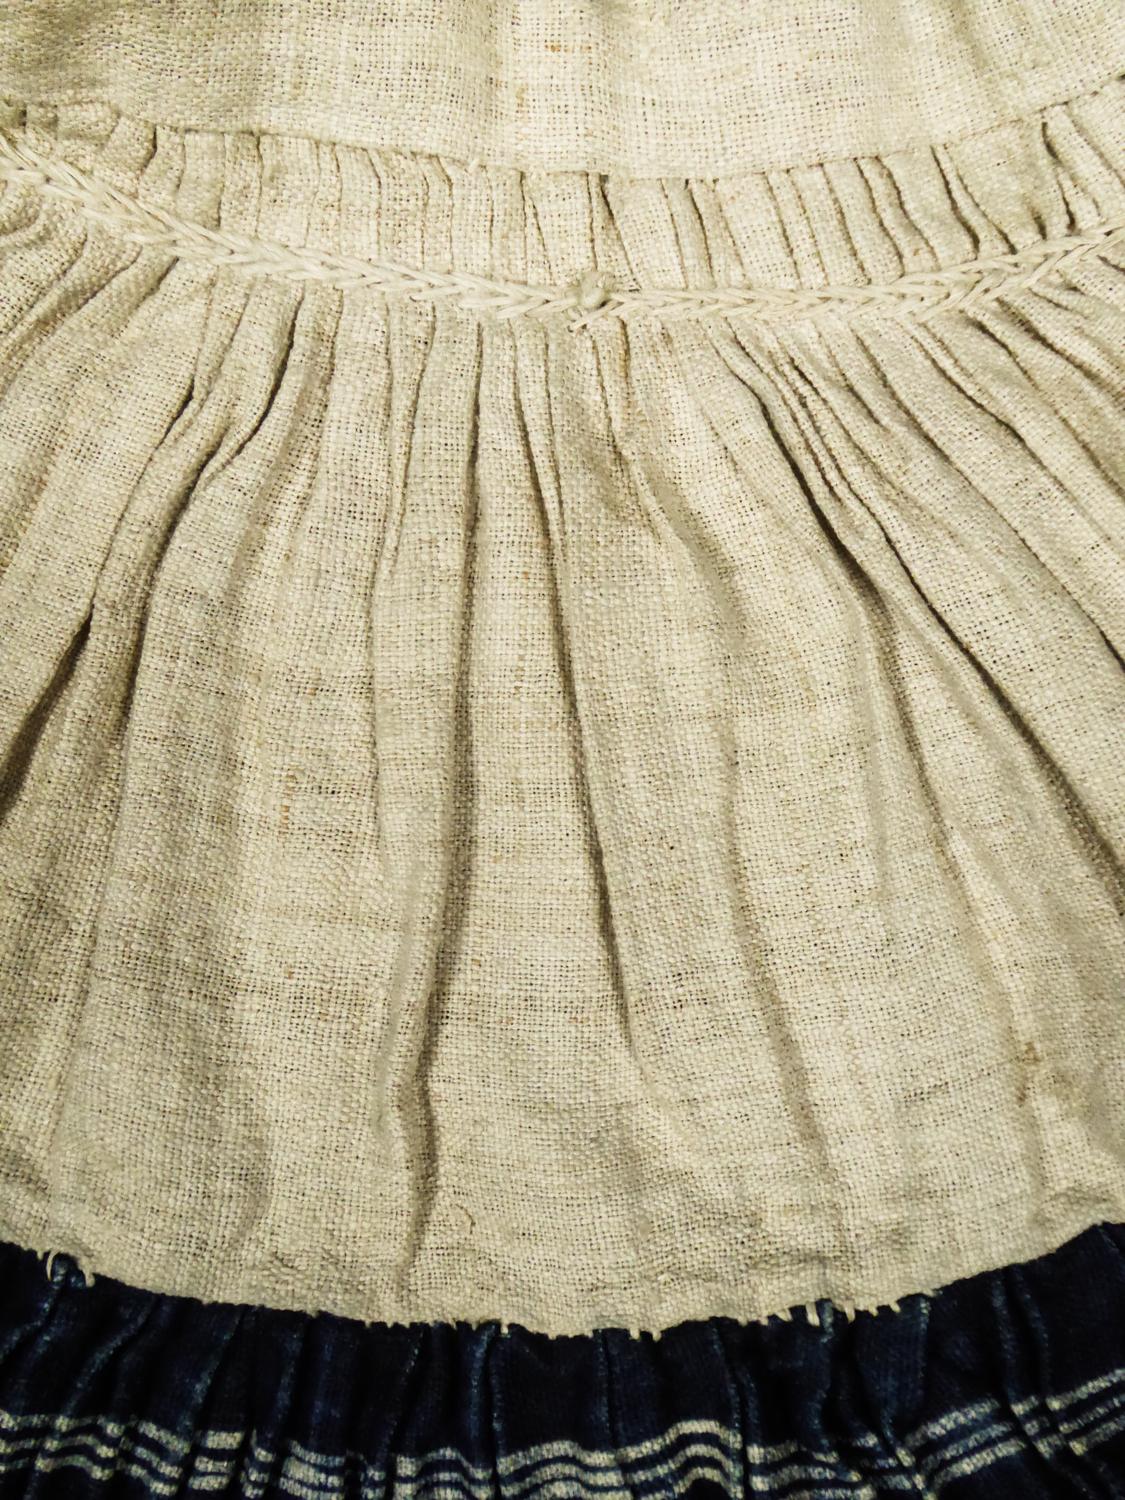 Miao - Hmong Pleated Skirt - Thailand Circa 1950 9